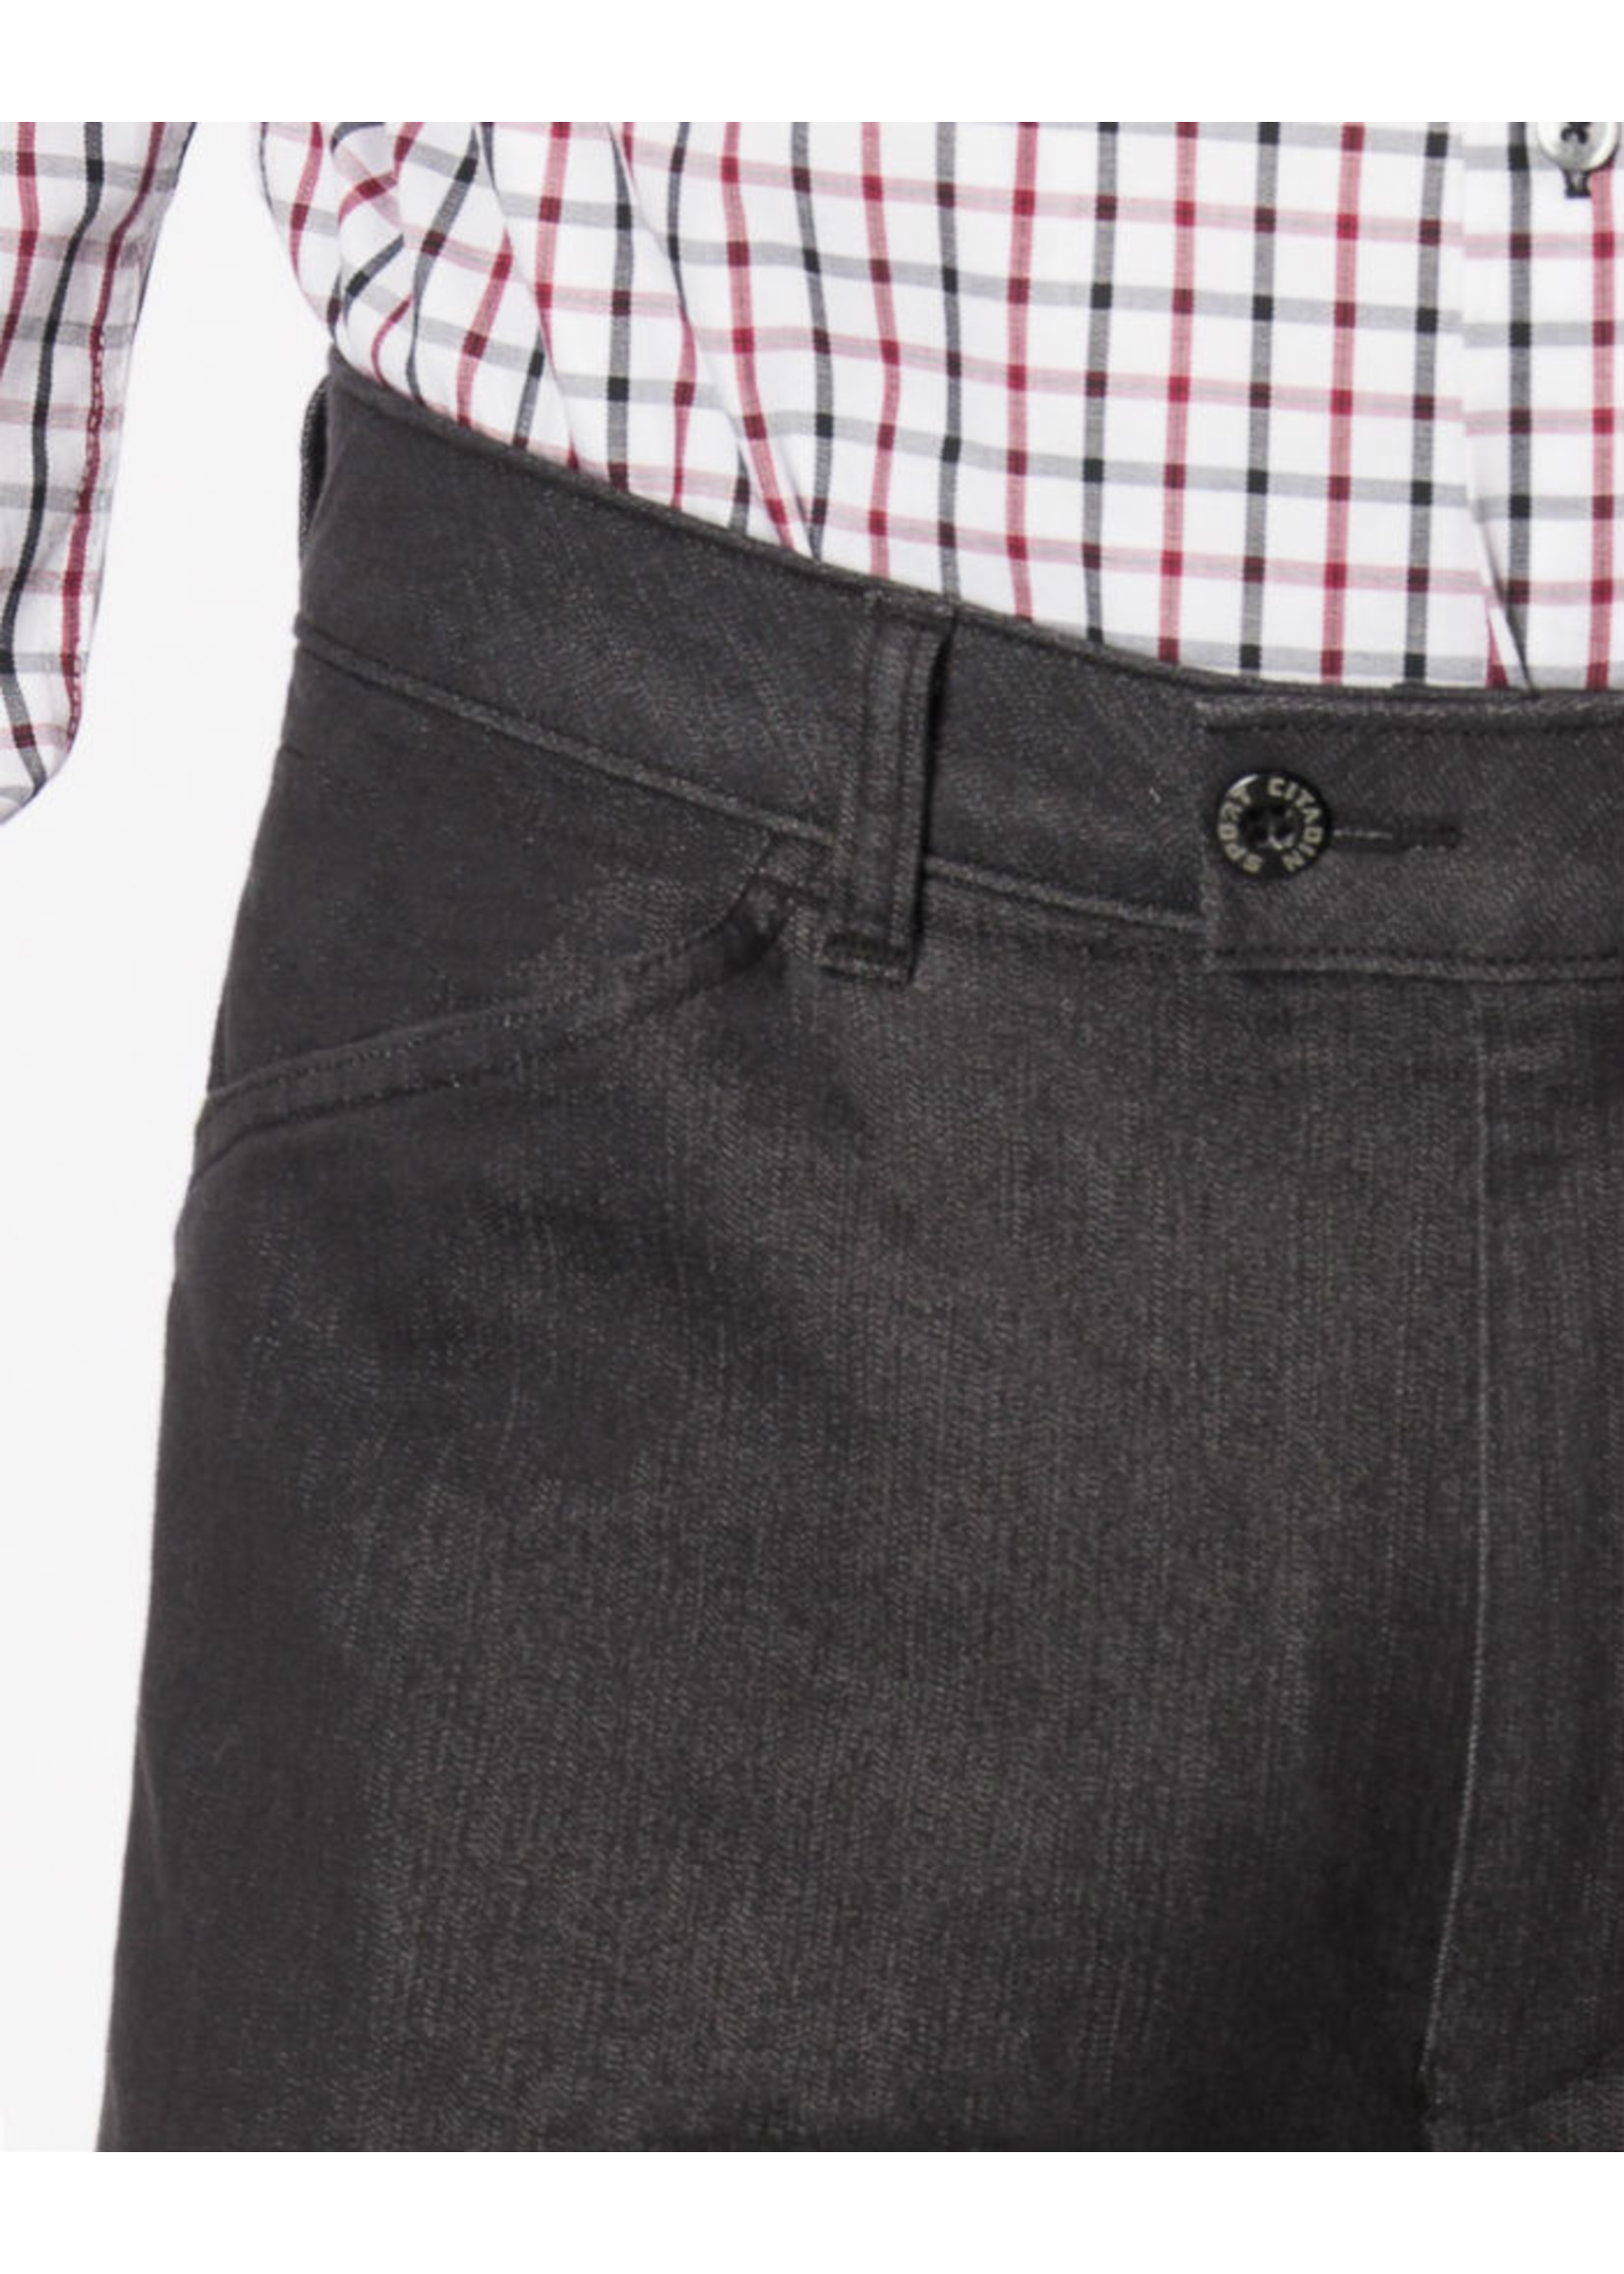 CITADIN Men's western pocket casual jeans